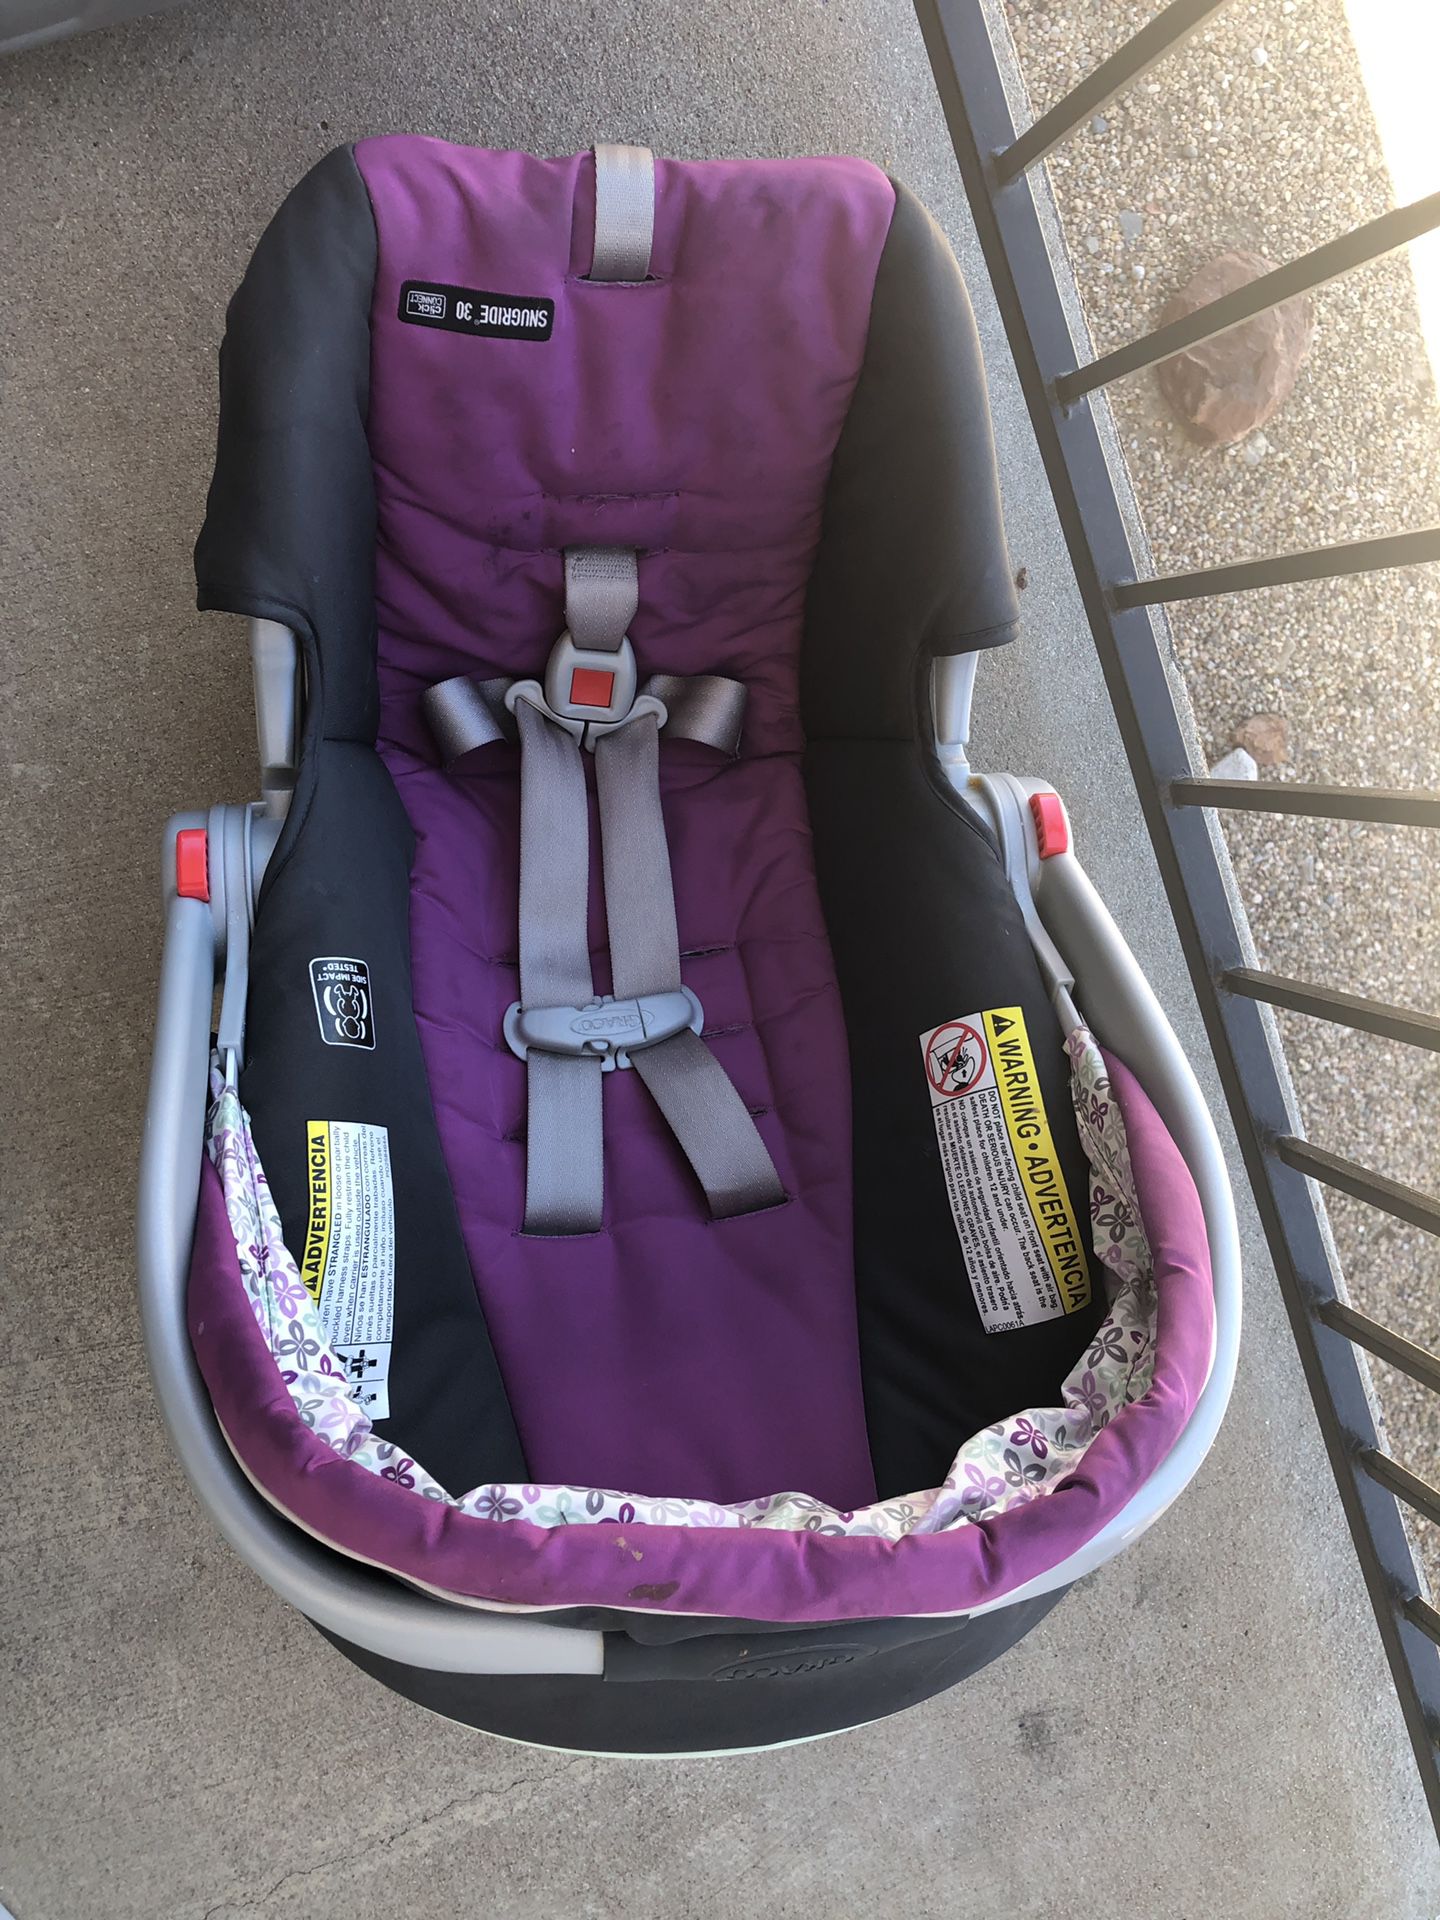 Graco SnugRide Click Connect 30 Infant Car Seat w/ Front Adjust, Kyte